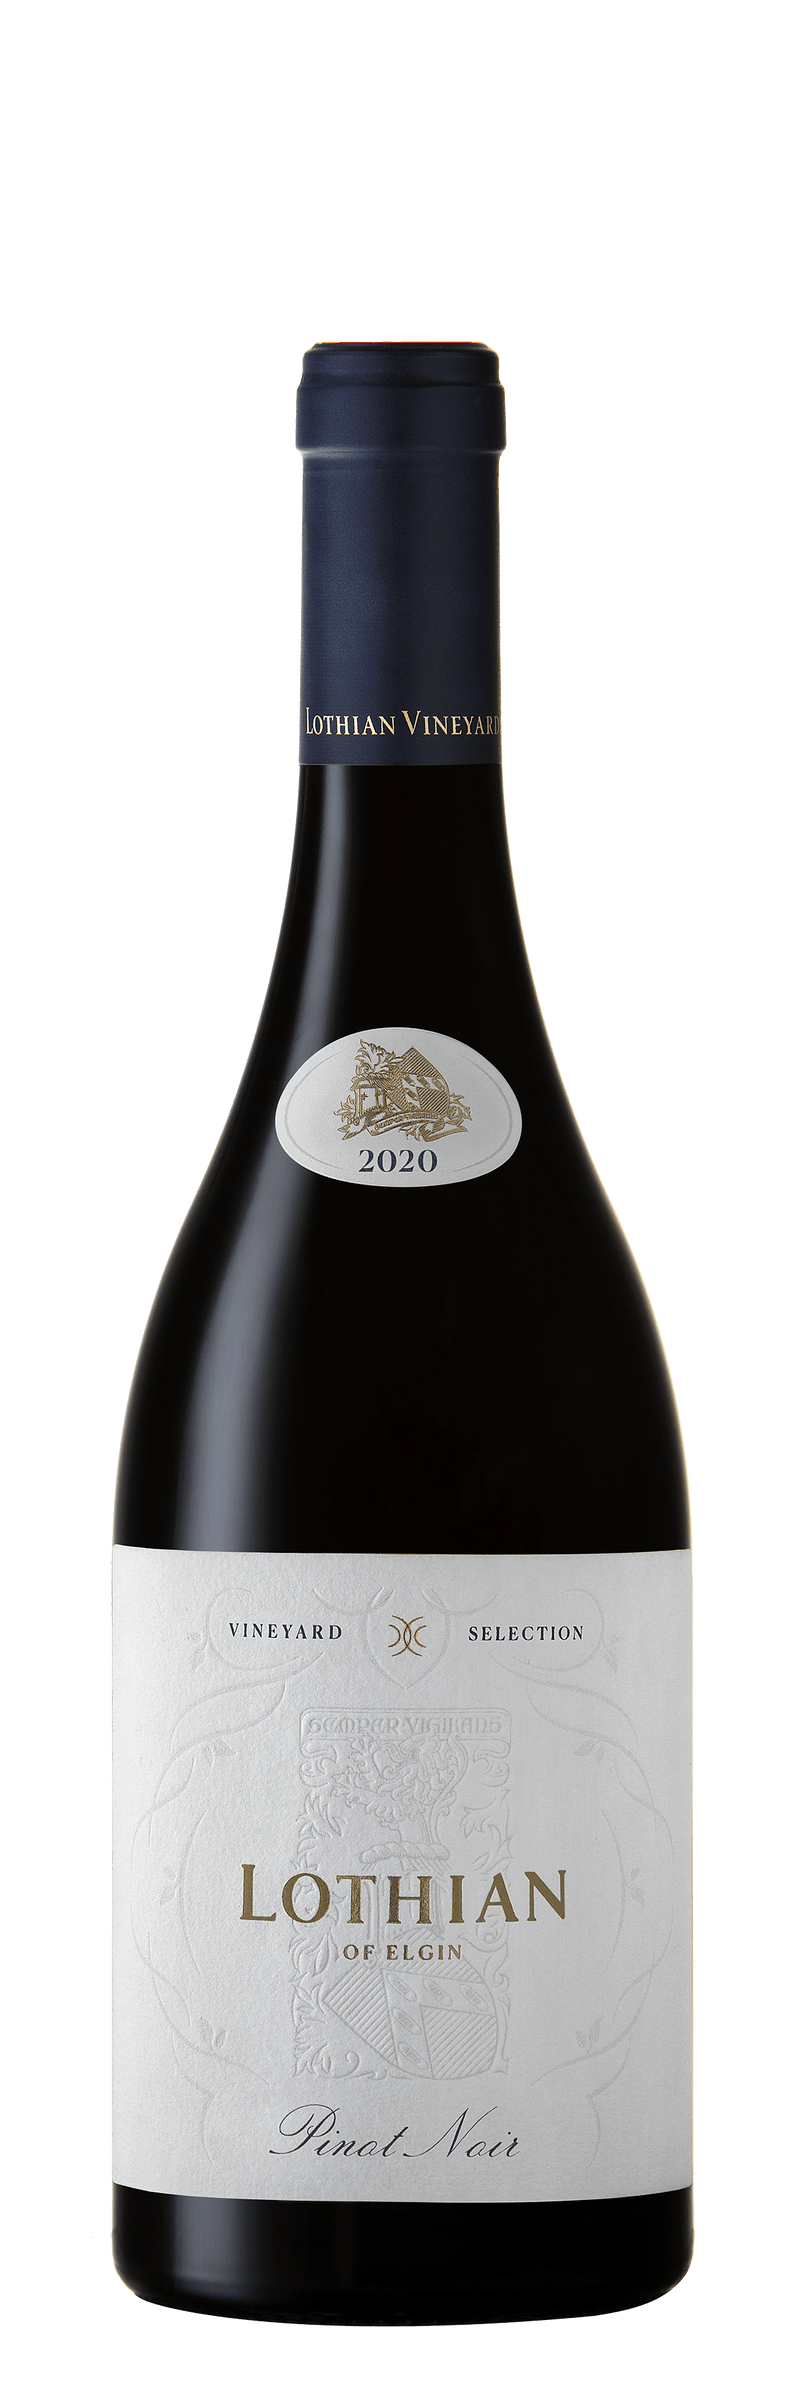 Lothian Vineyards Pinot Noir 2020 75cl